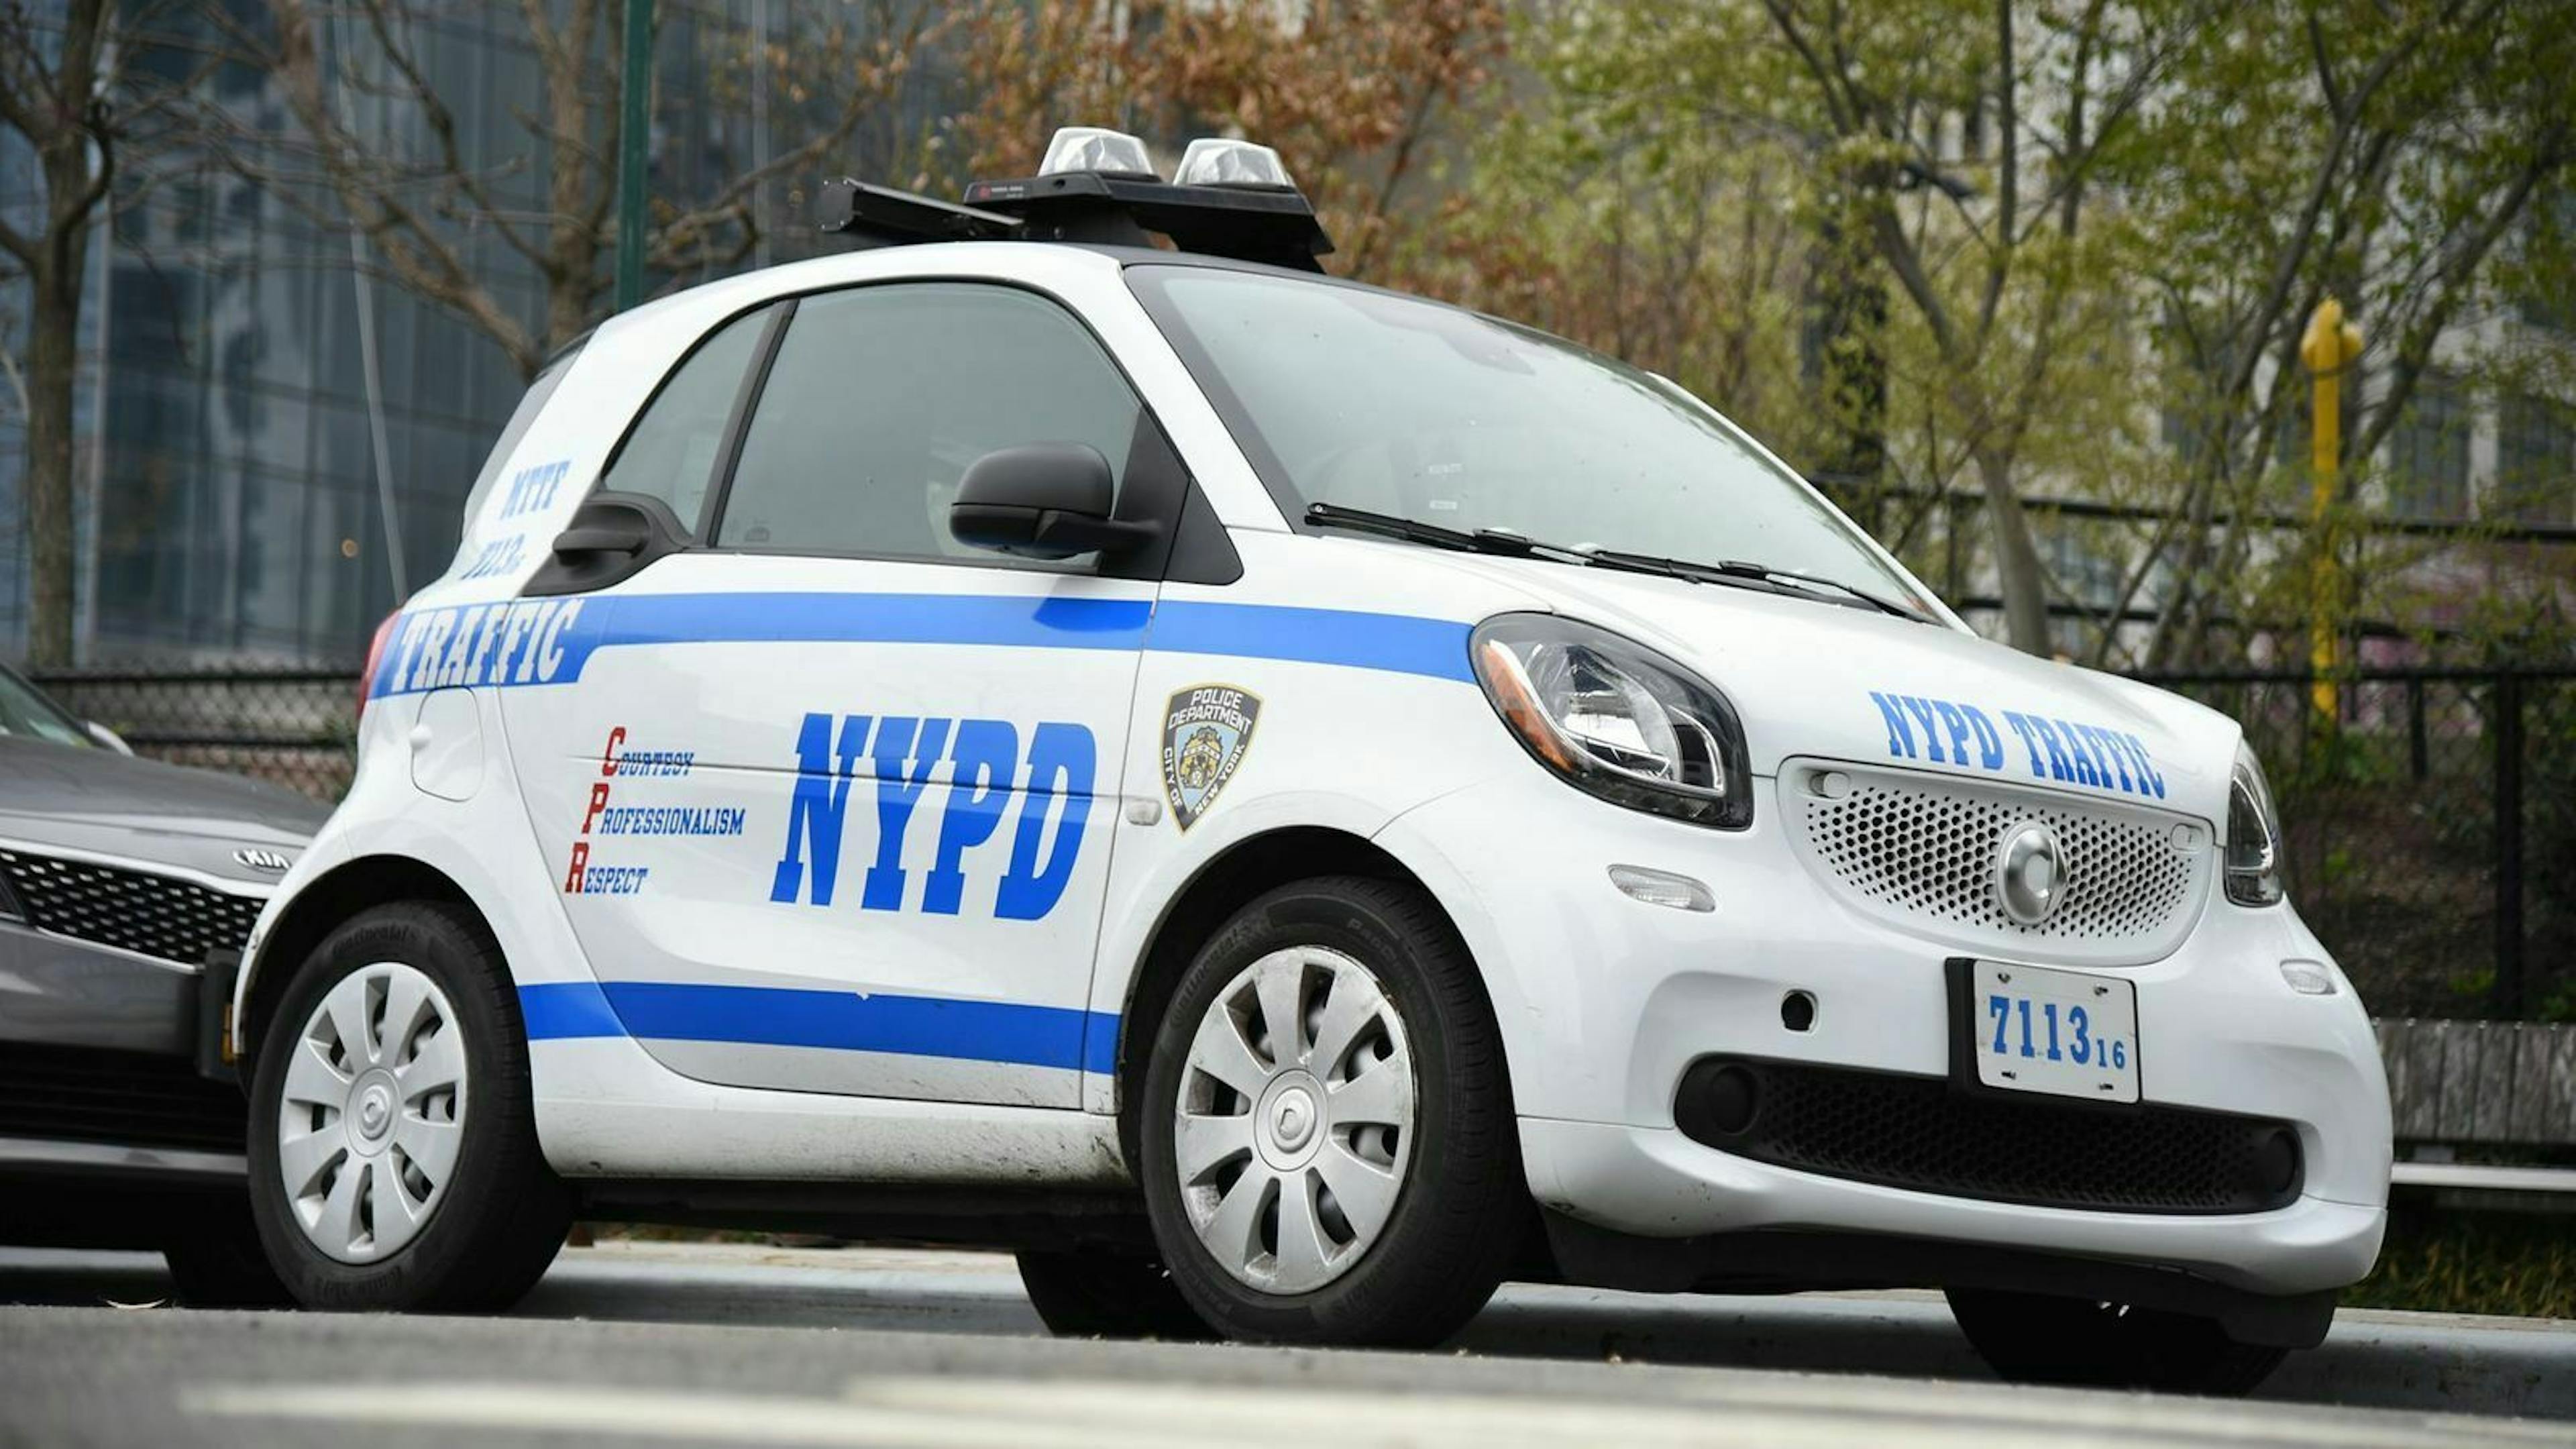 NYPD Smart Fortwo am Straßenrand stehend